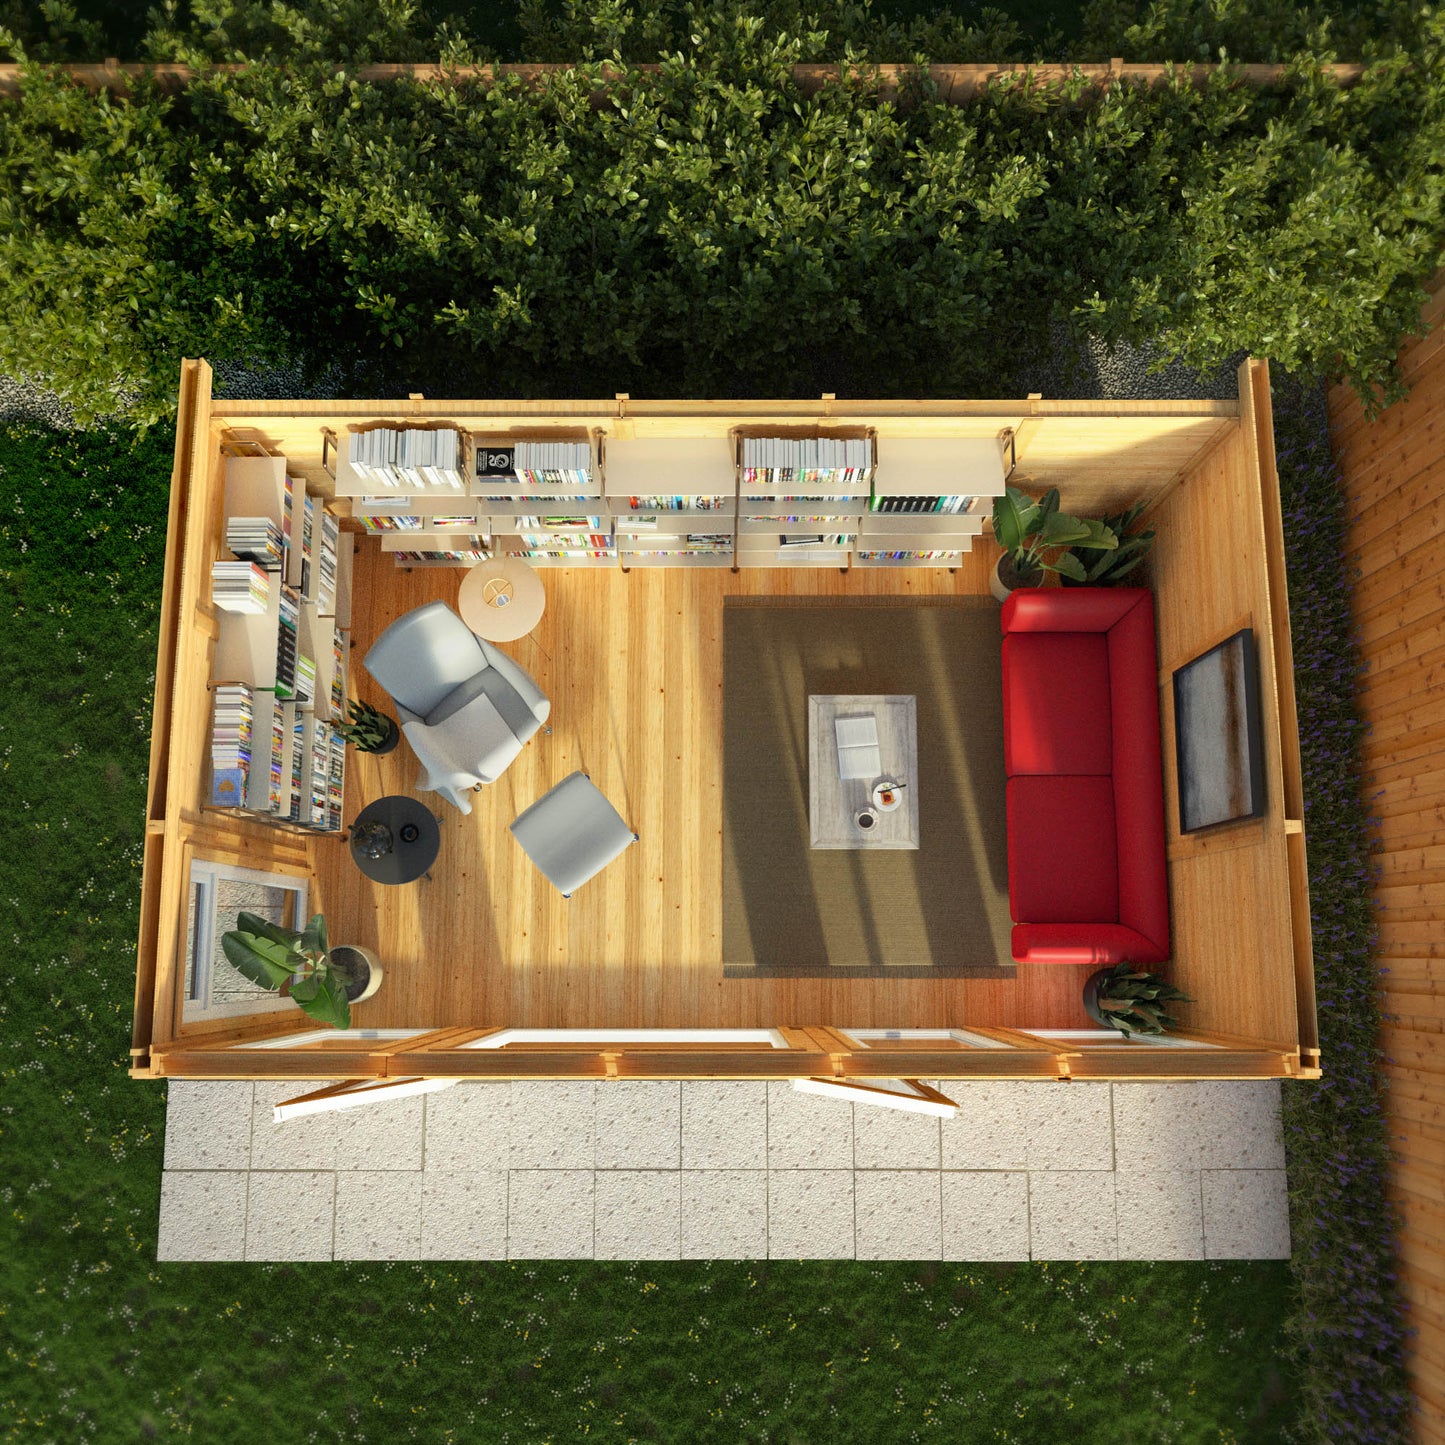 The Edwinstowe 5m x 3m Premium Insulated Garden Room with Oak UPVC